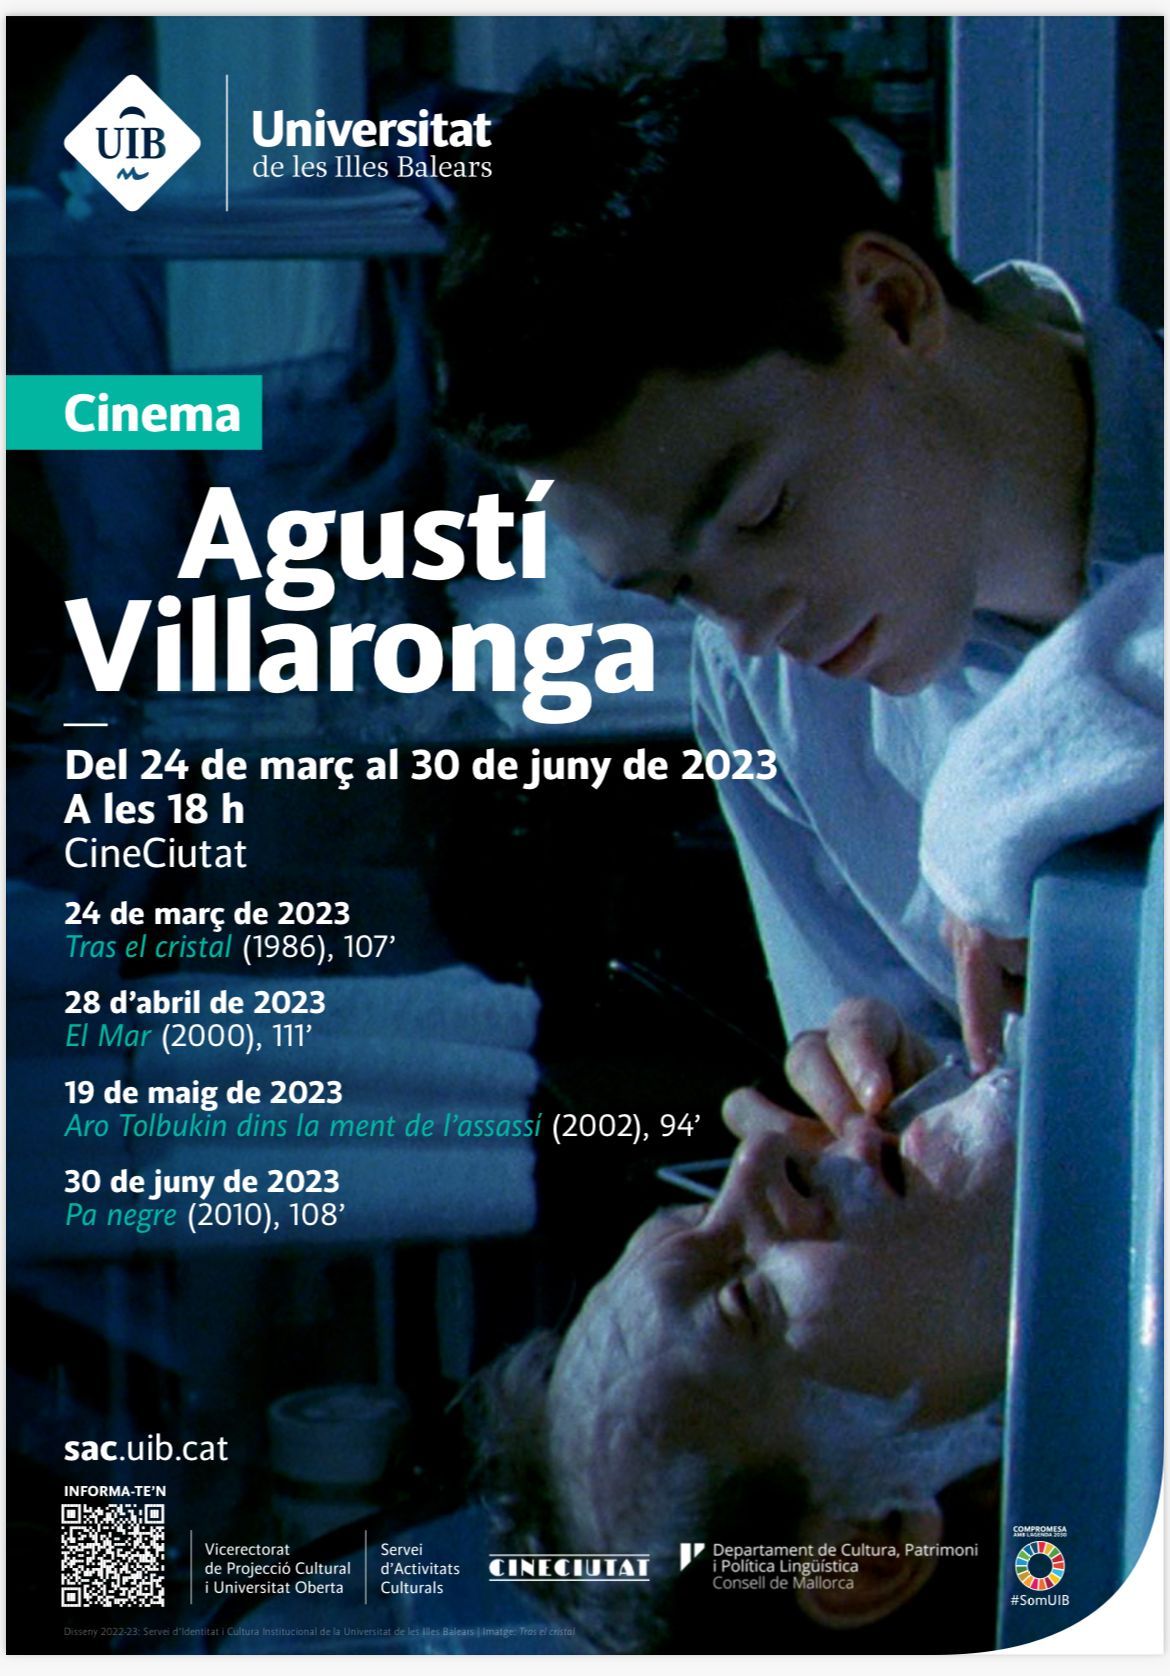 Homenaje a Agustí Villaronga en el Cineciutat